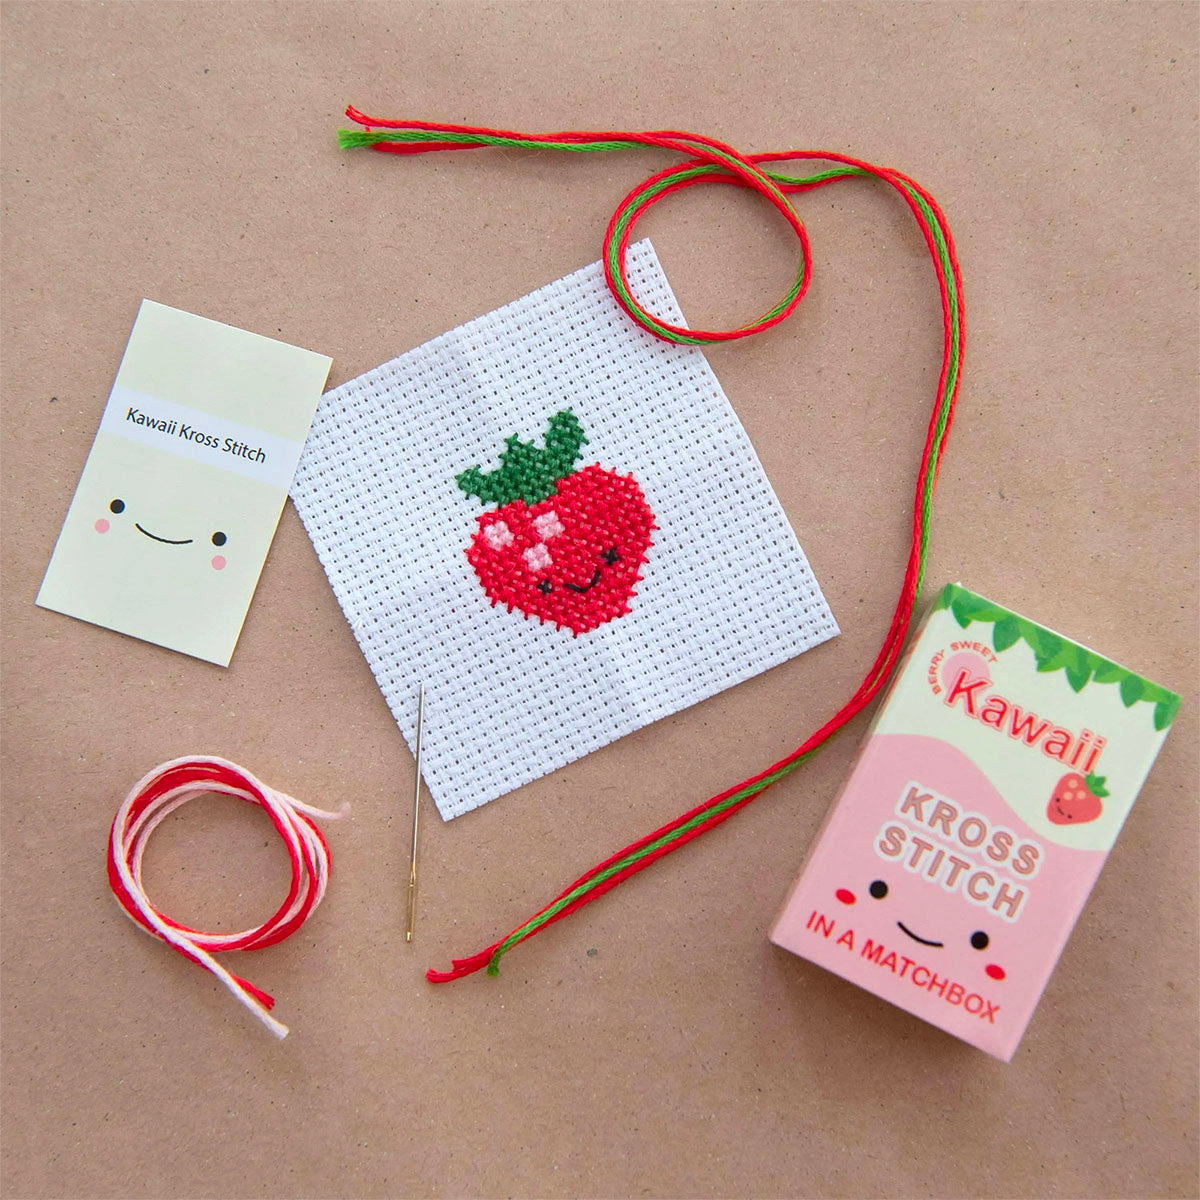 Mini Matchbox Cross Stitch Kit - Kawaii Strawberry